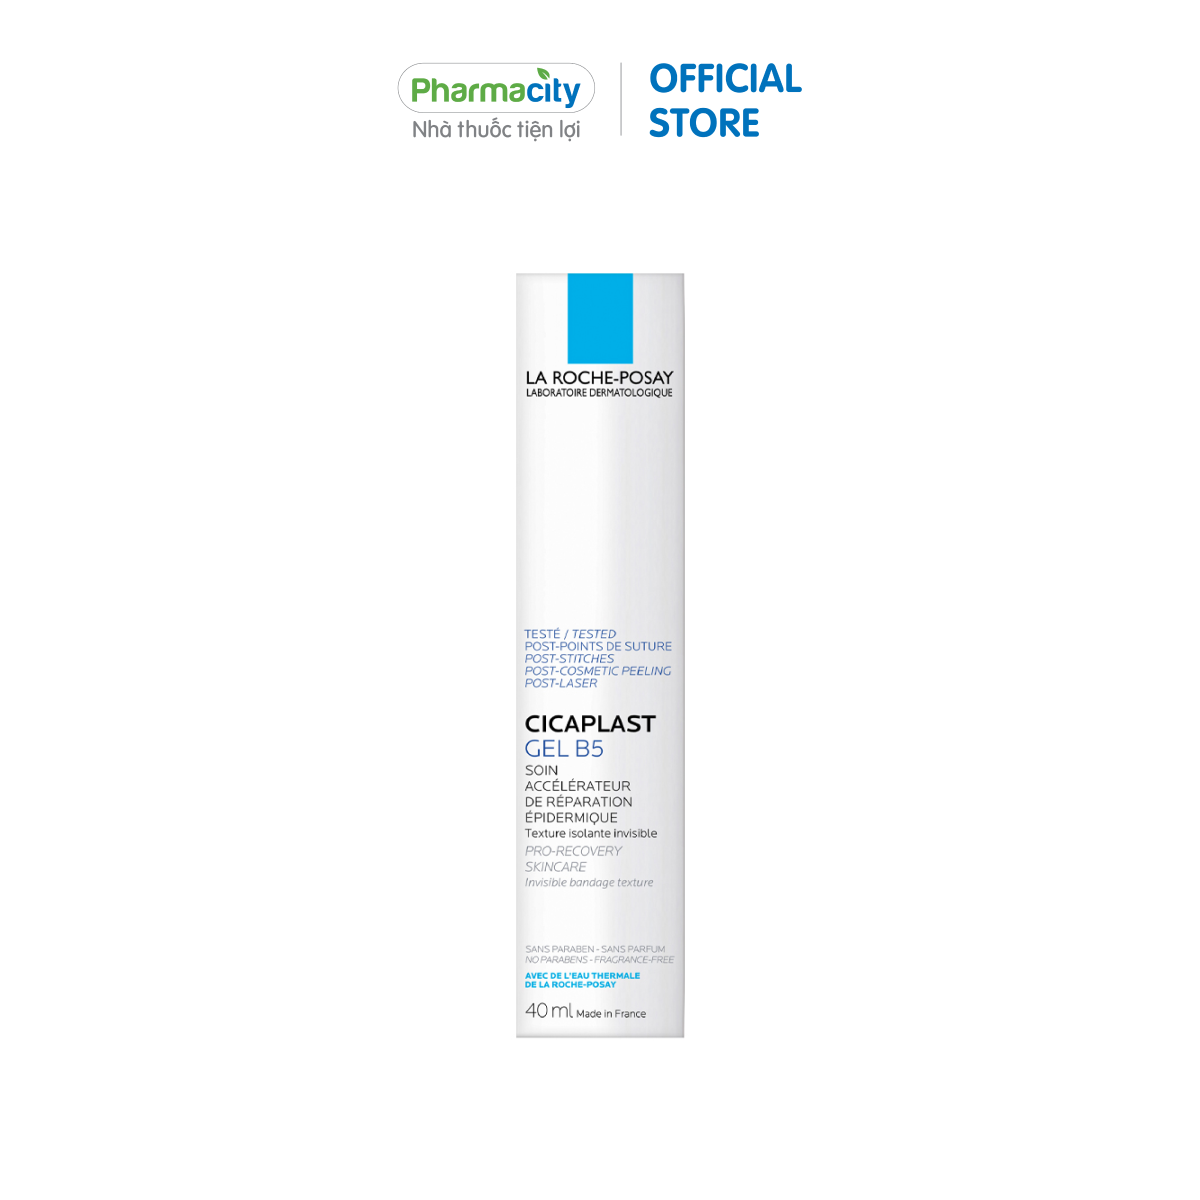 Gel dưỡng làm mờ sẹo Cicaplast Gel B5 Epidermal Recovery Accelerator Skincare (Hộp 40ml)